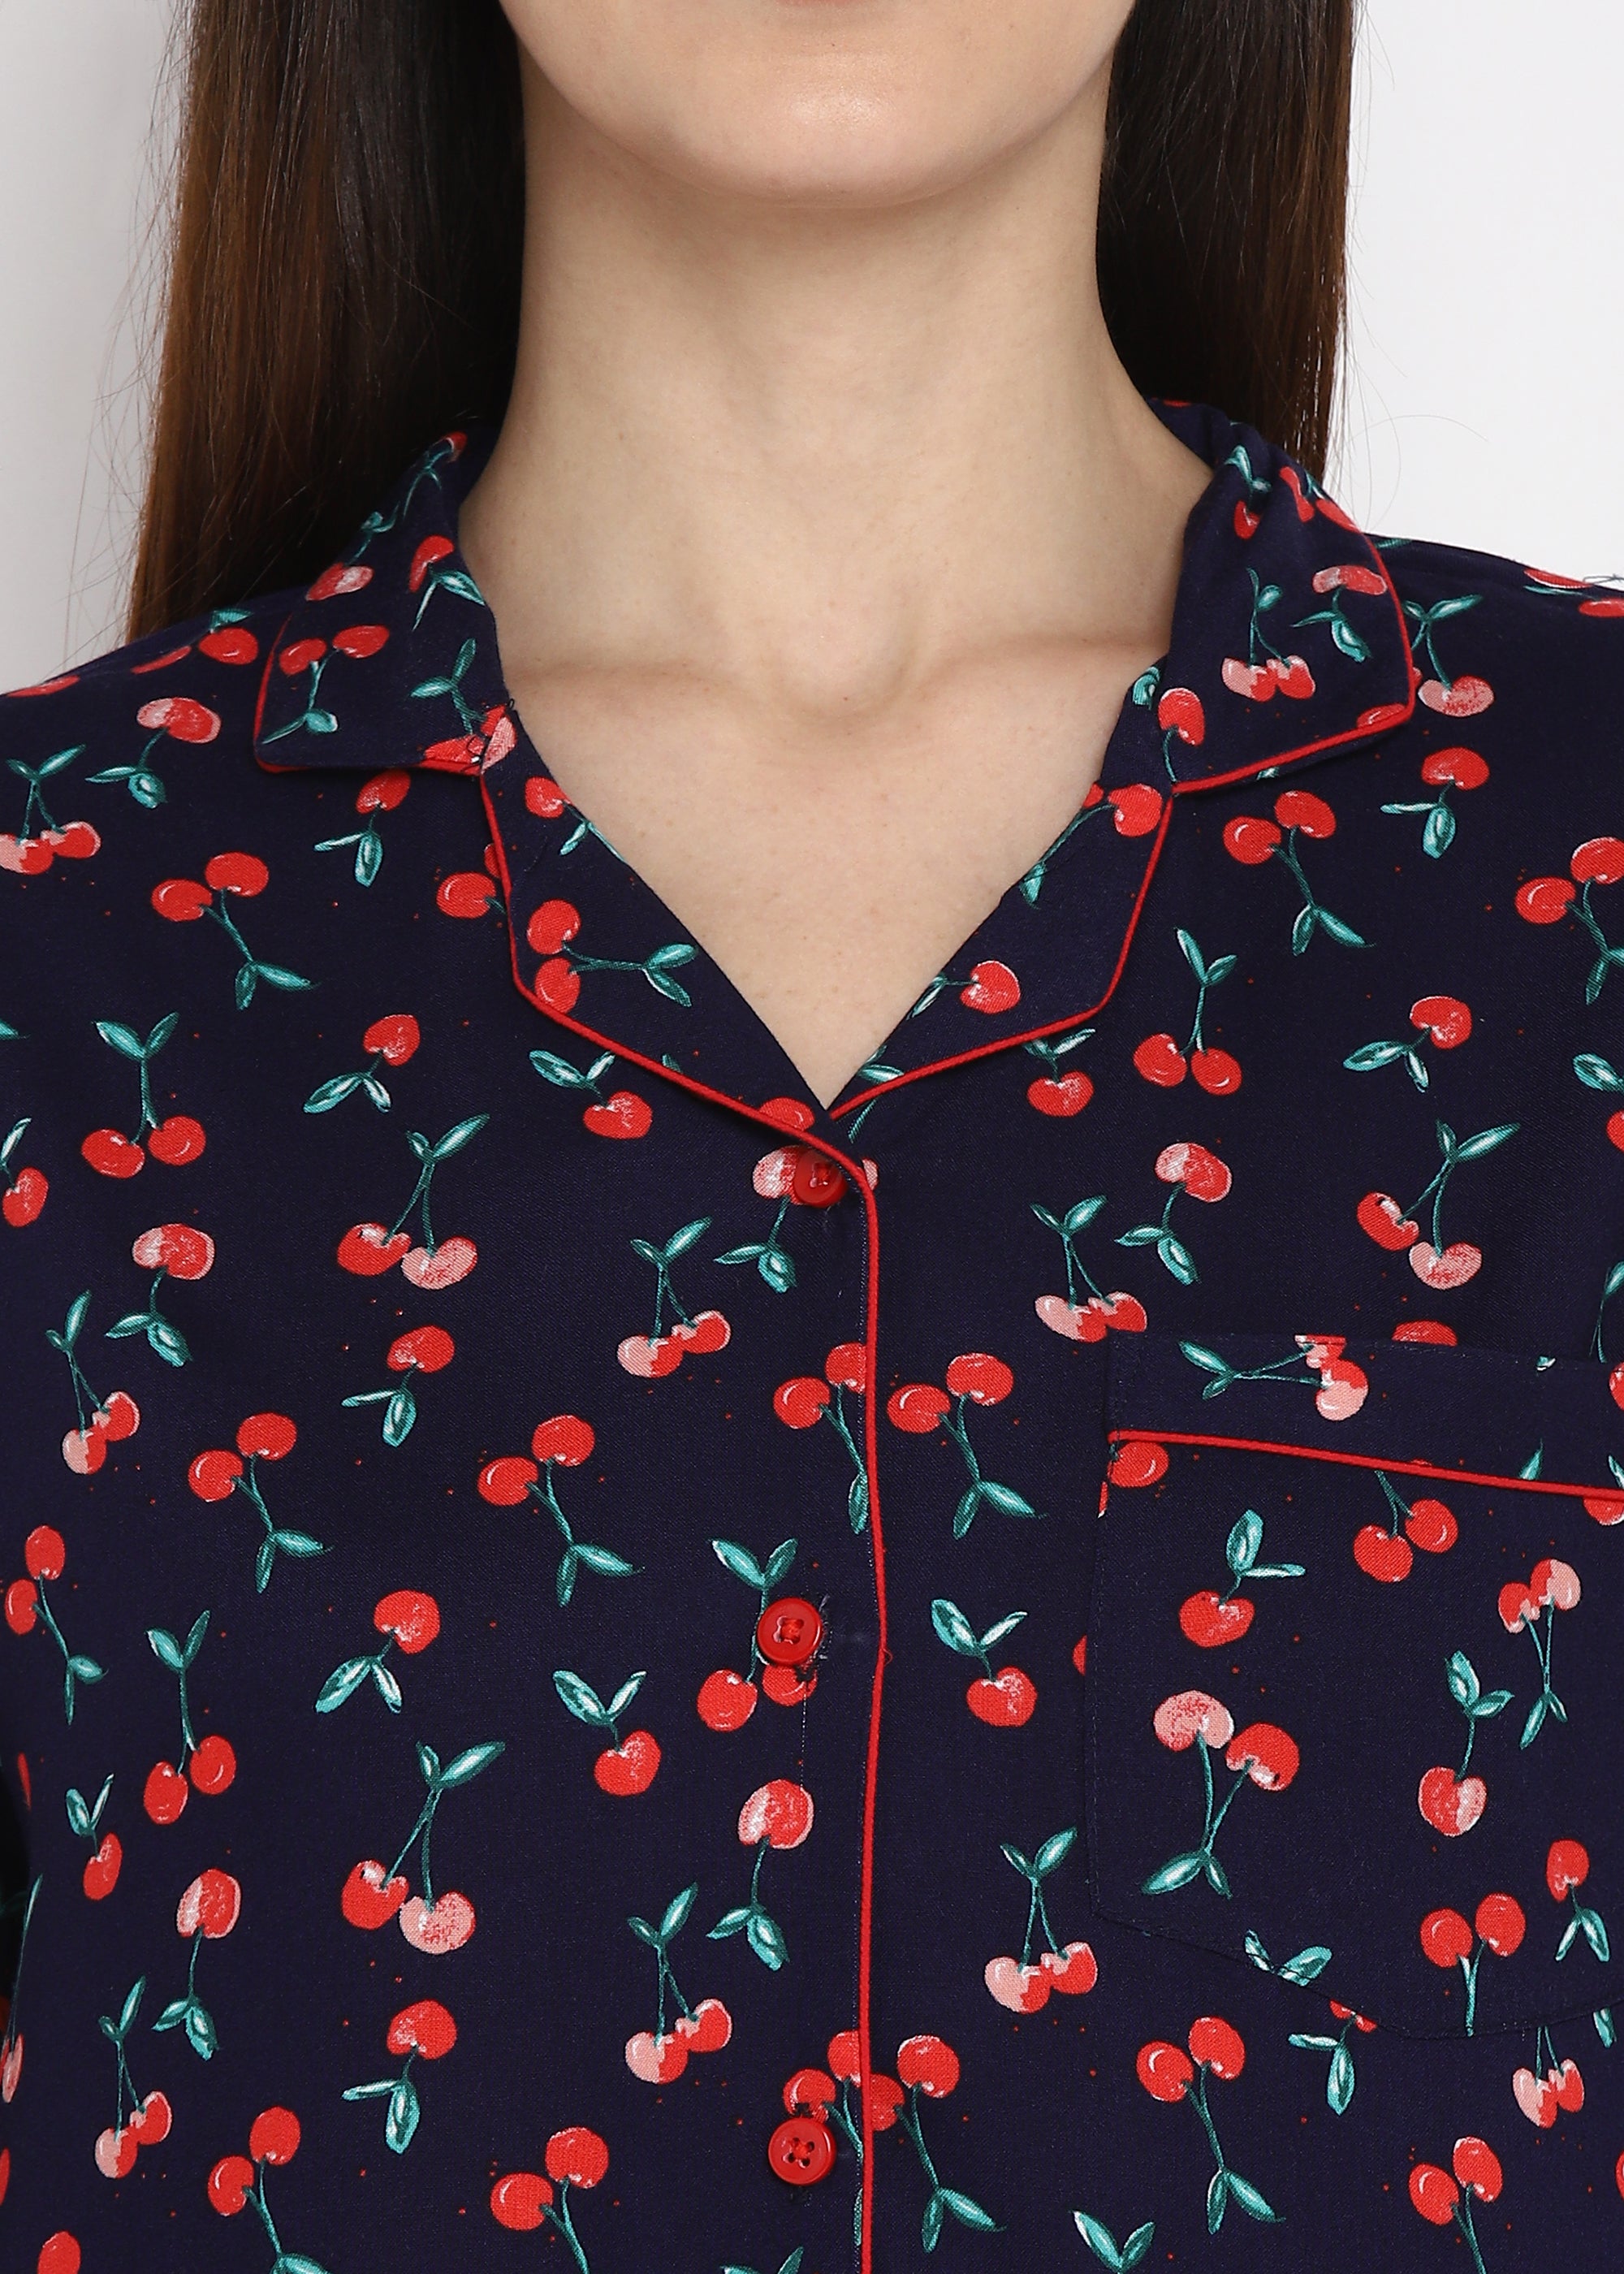 Cherry Land Print Long Sleeve Women's Night Suit - Shopbloom